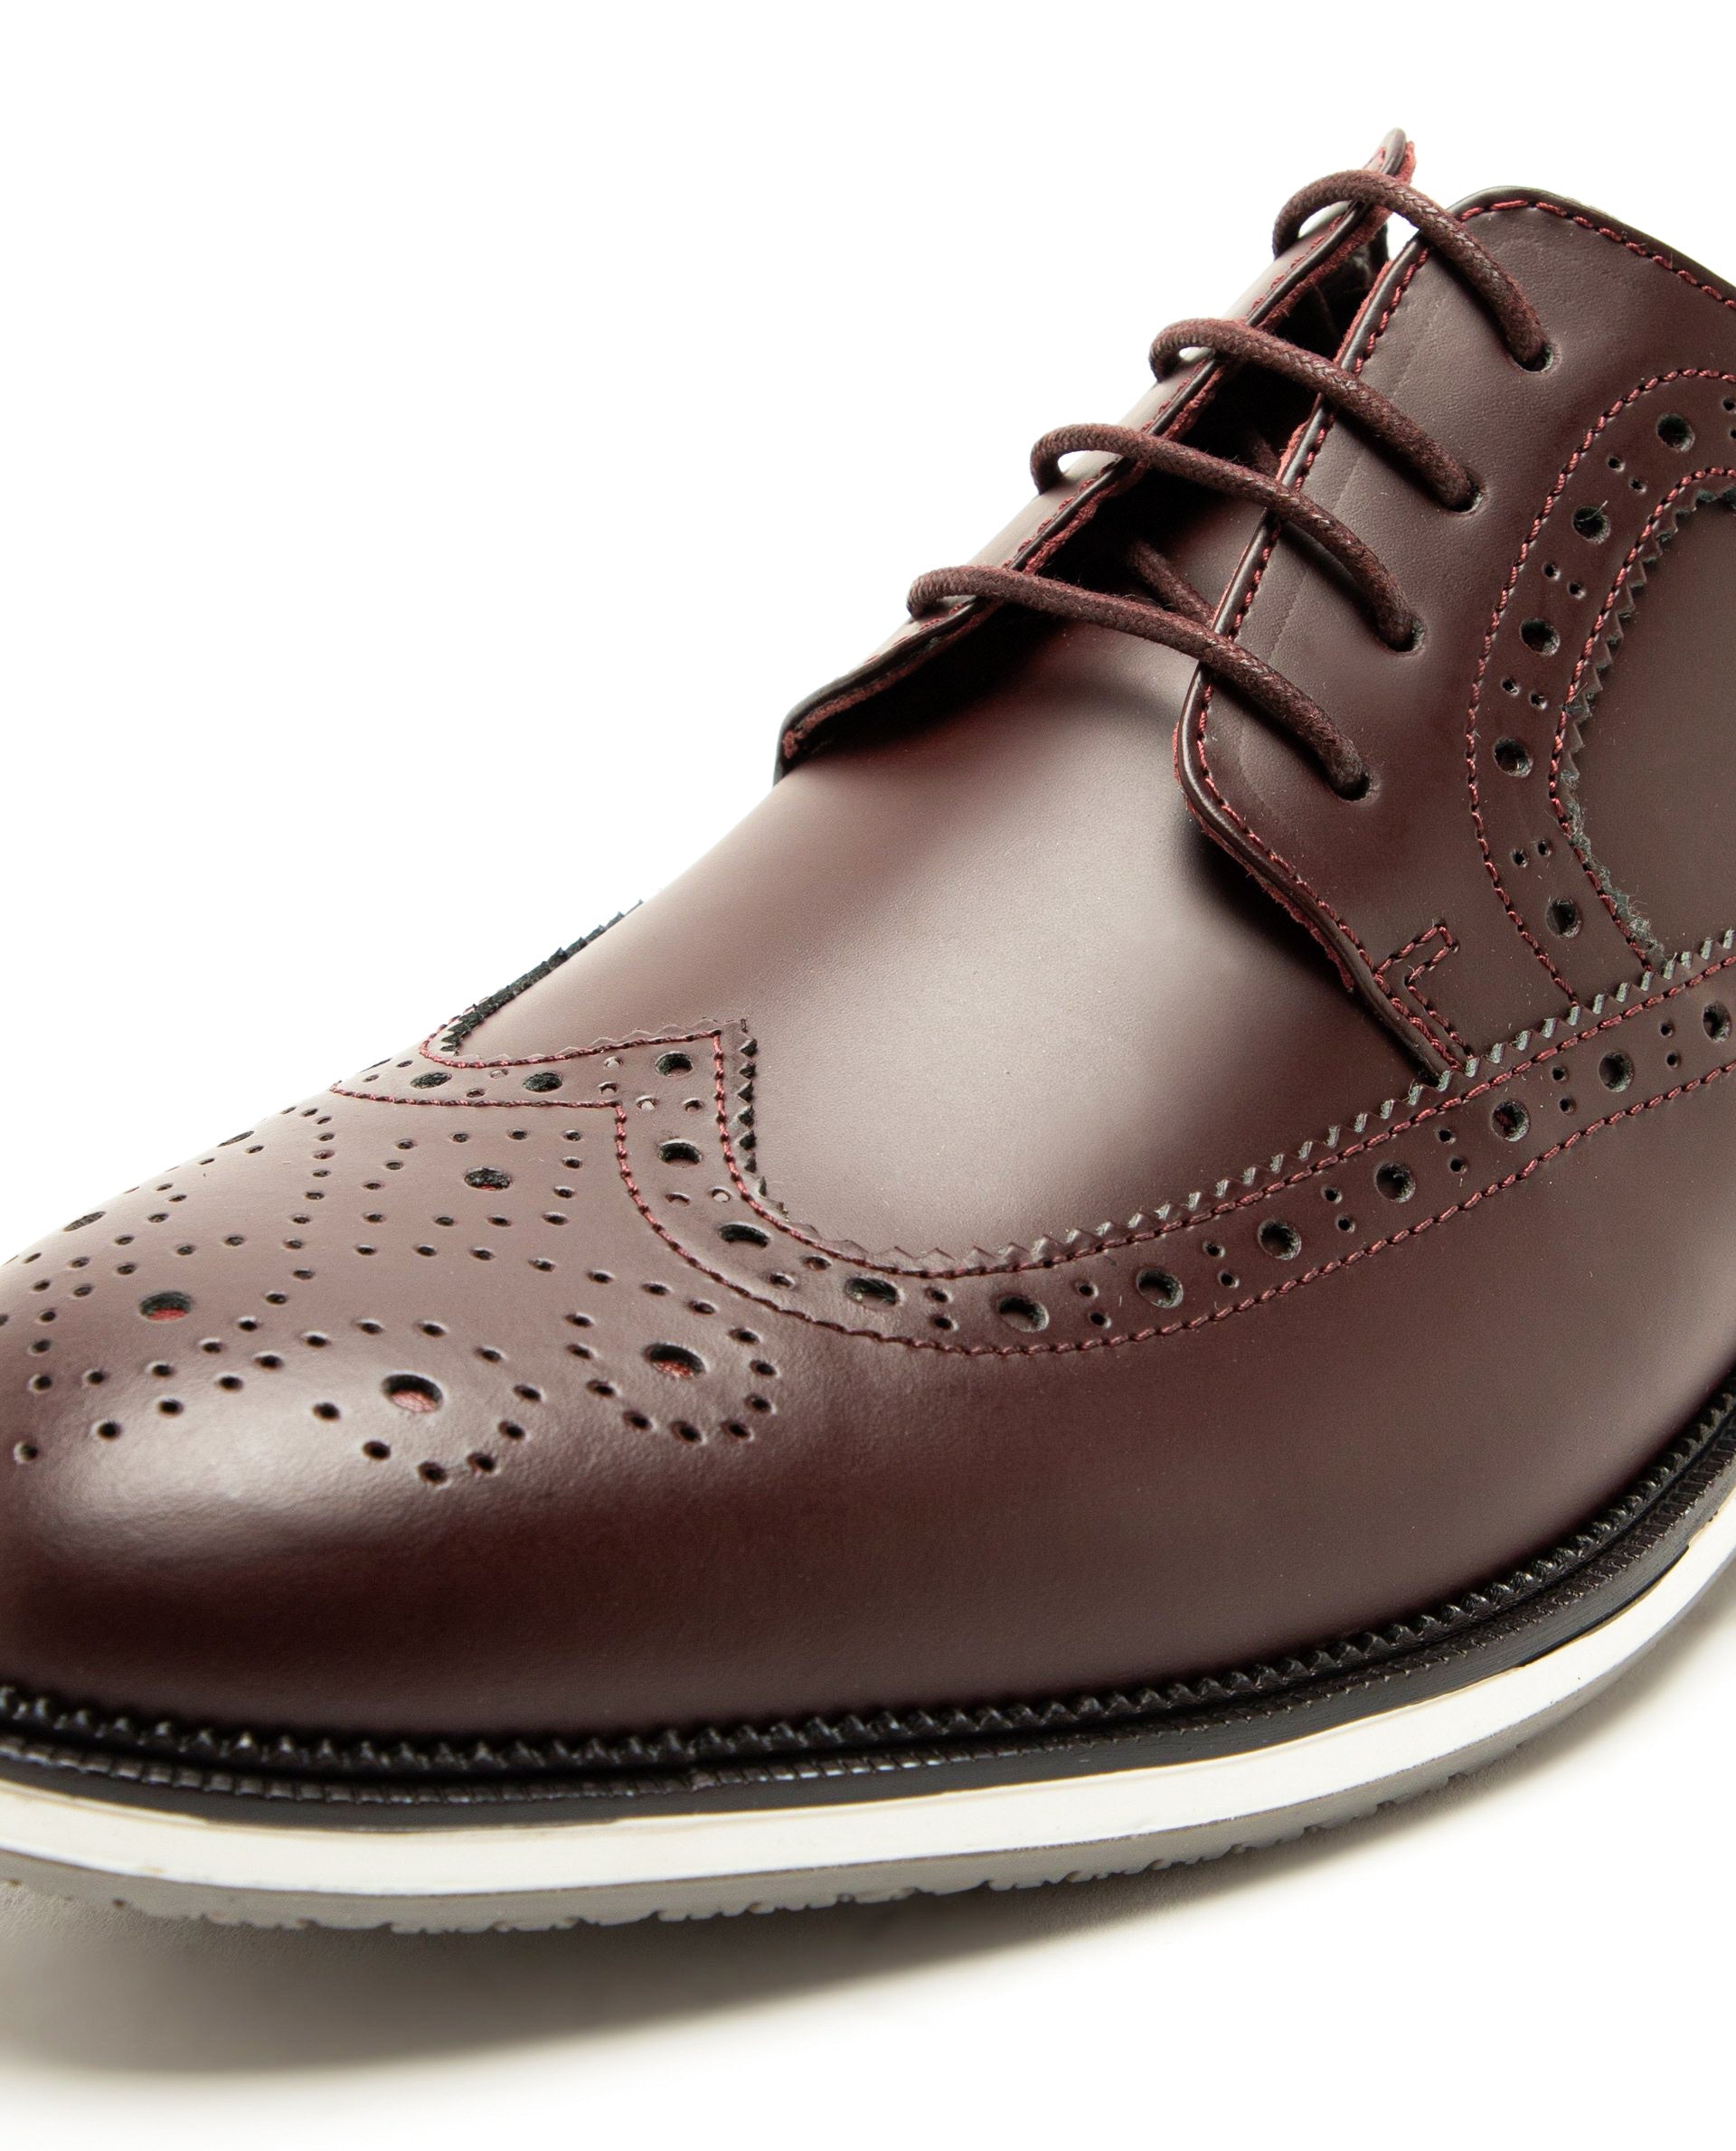 Grandeurman: Artistic Leather Footwear For Men | The Dare Doer